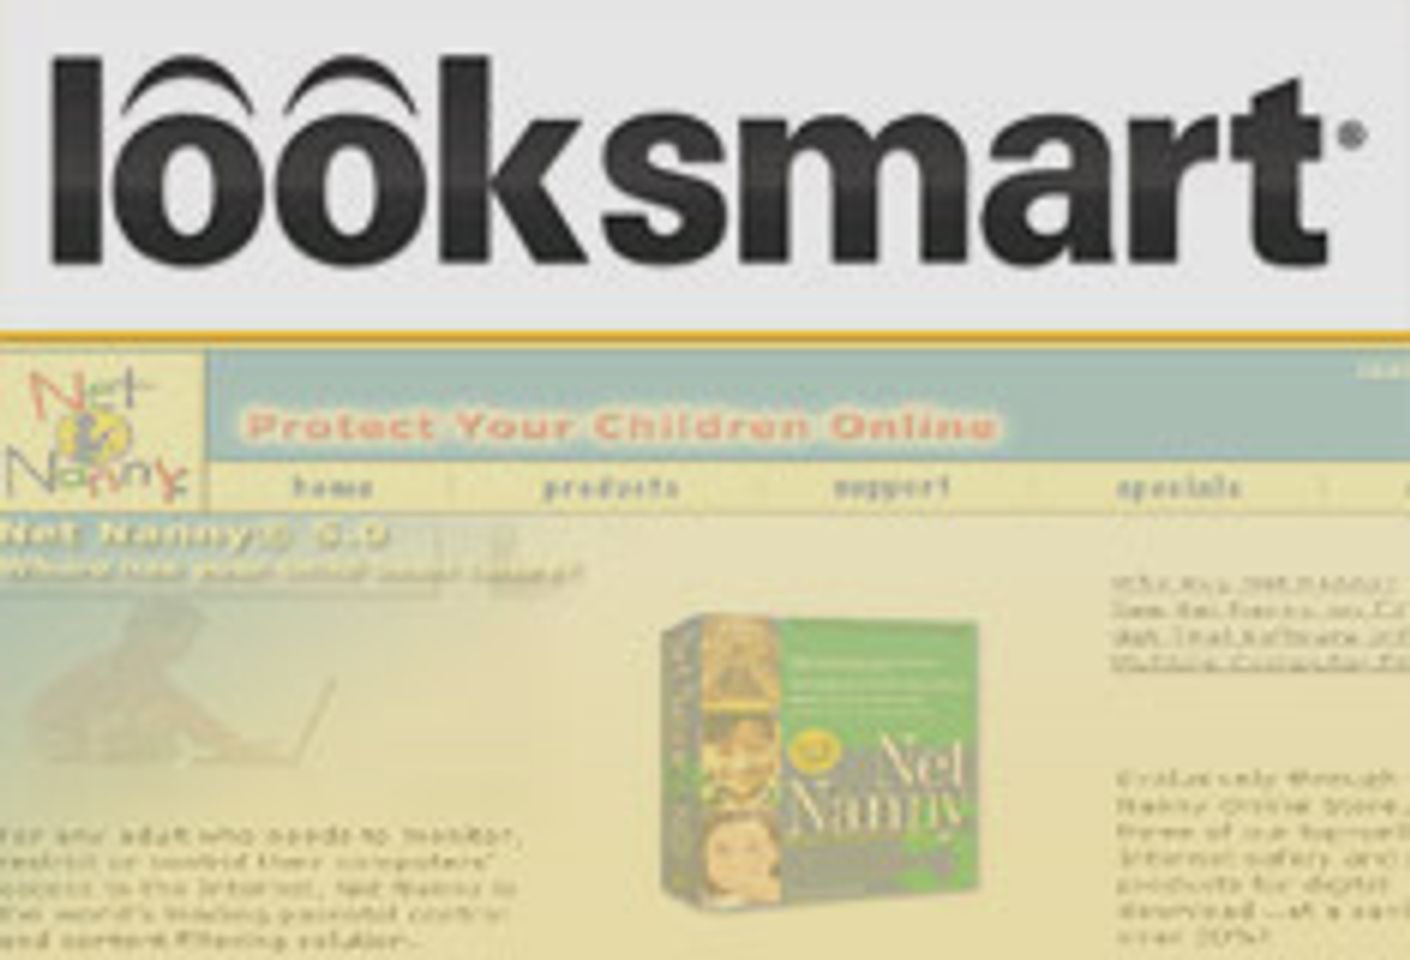 LookSmart Buys Net Nanny for $5 Million